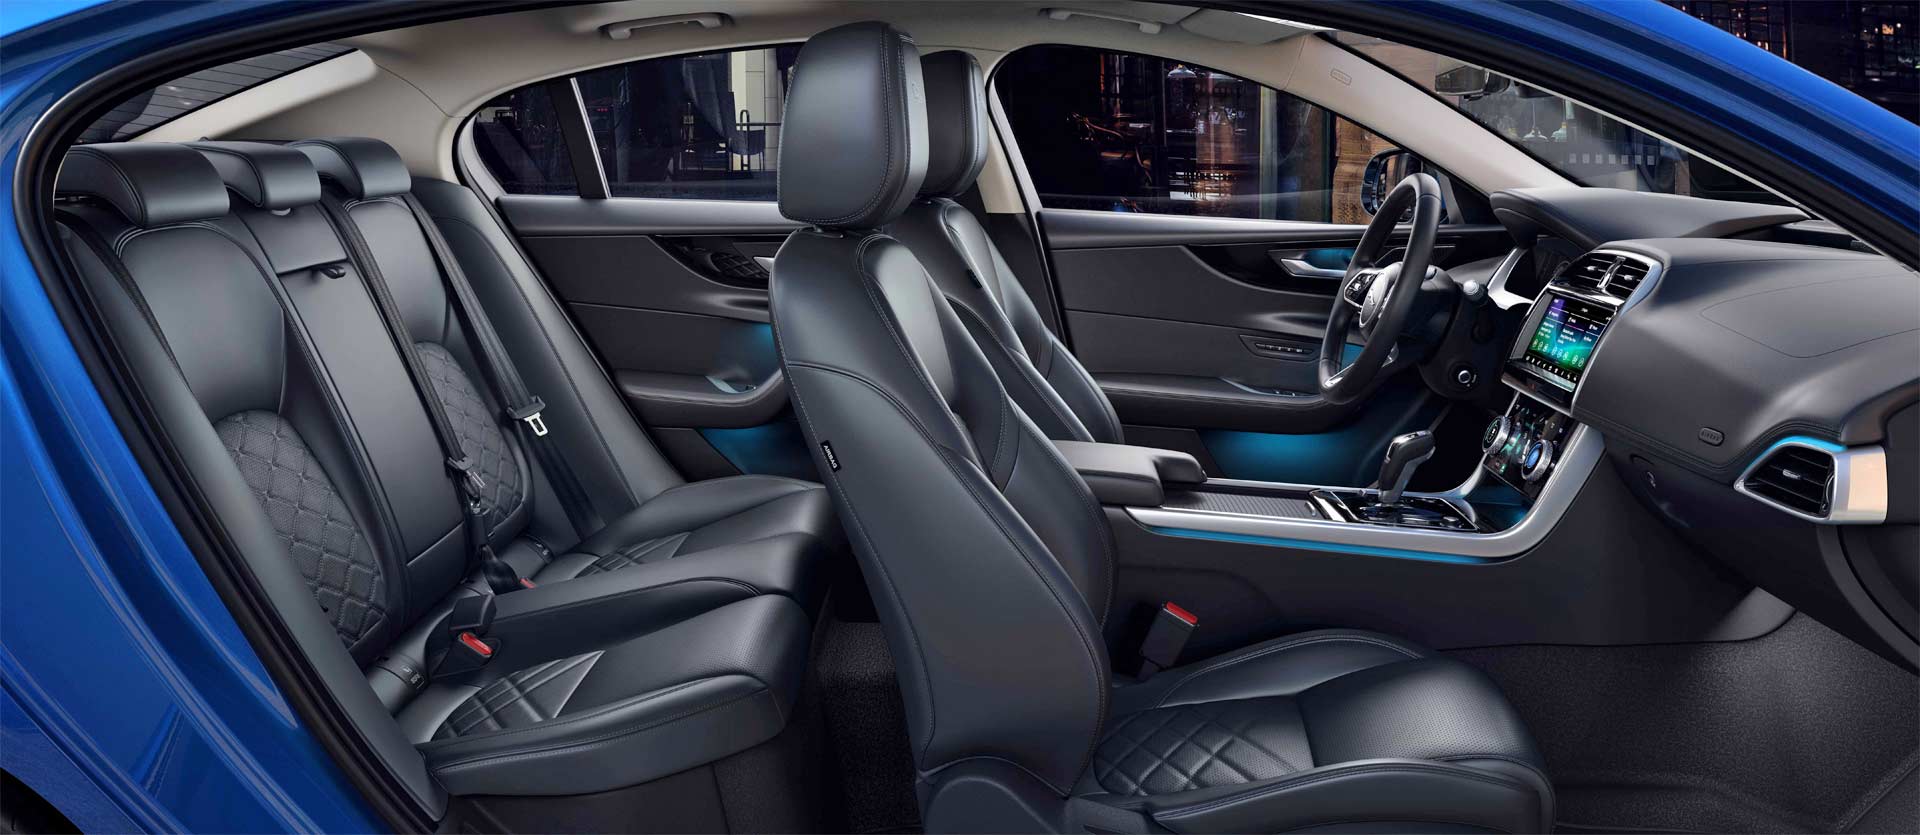 2020-Jaguar-XE-Interior_4